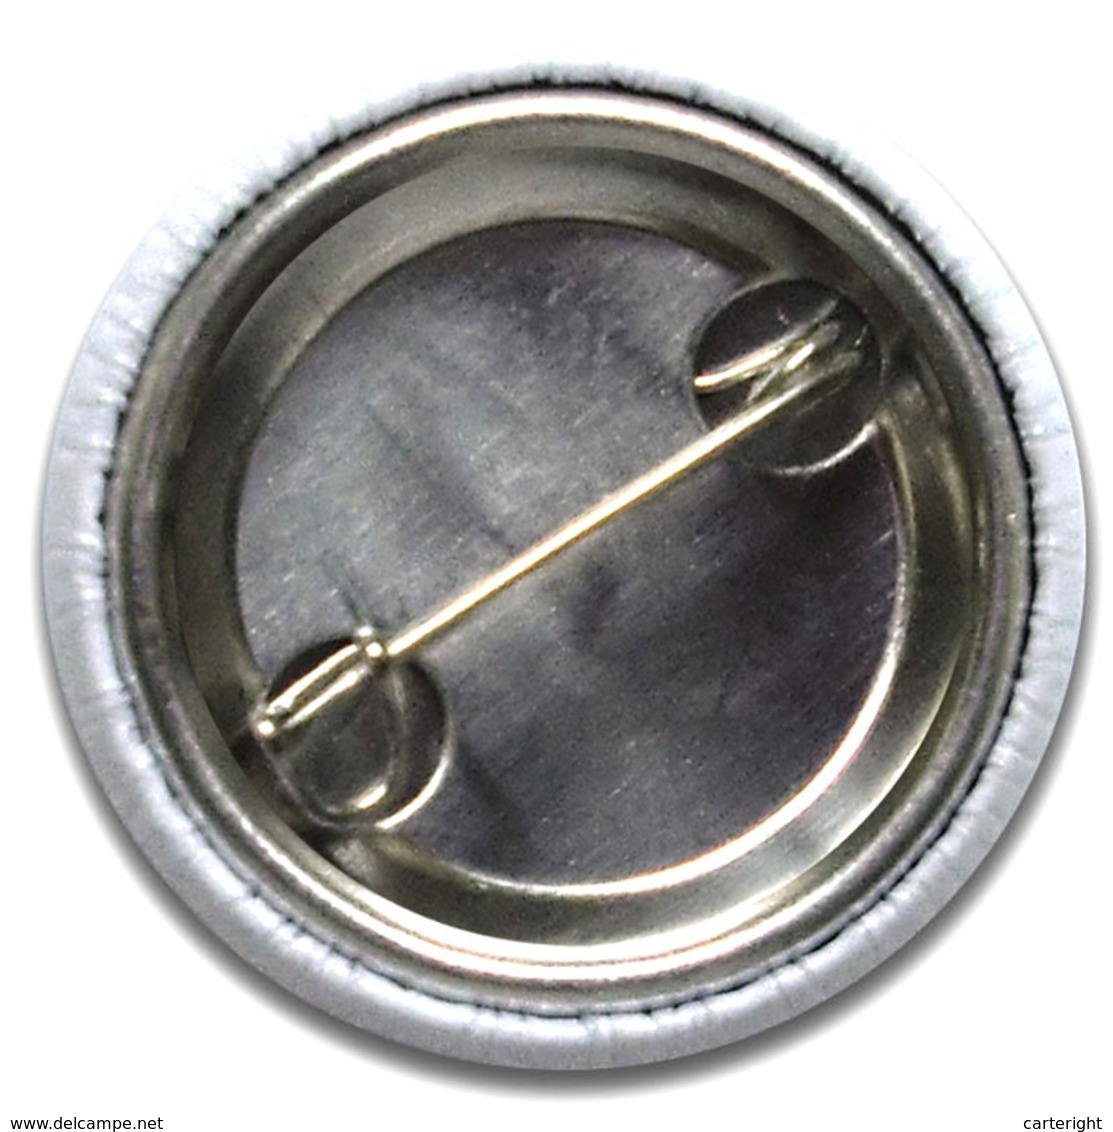 105 X FRANK SINATRA music fan ART BADGE BUTTON PIN SET 4-6  (1inch/25mm diameter)